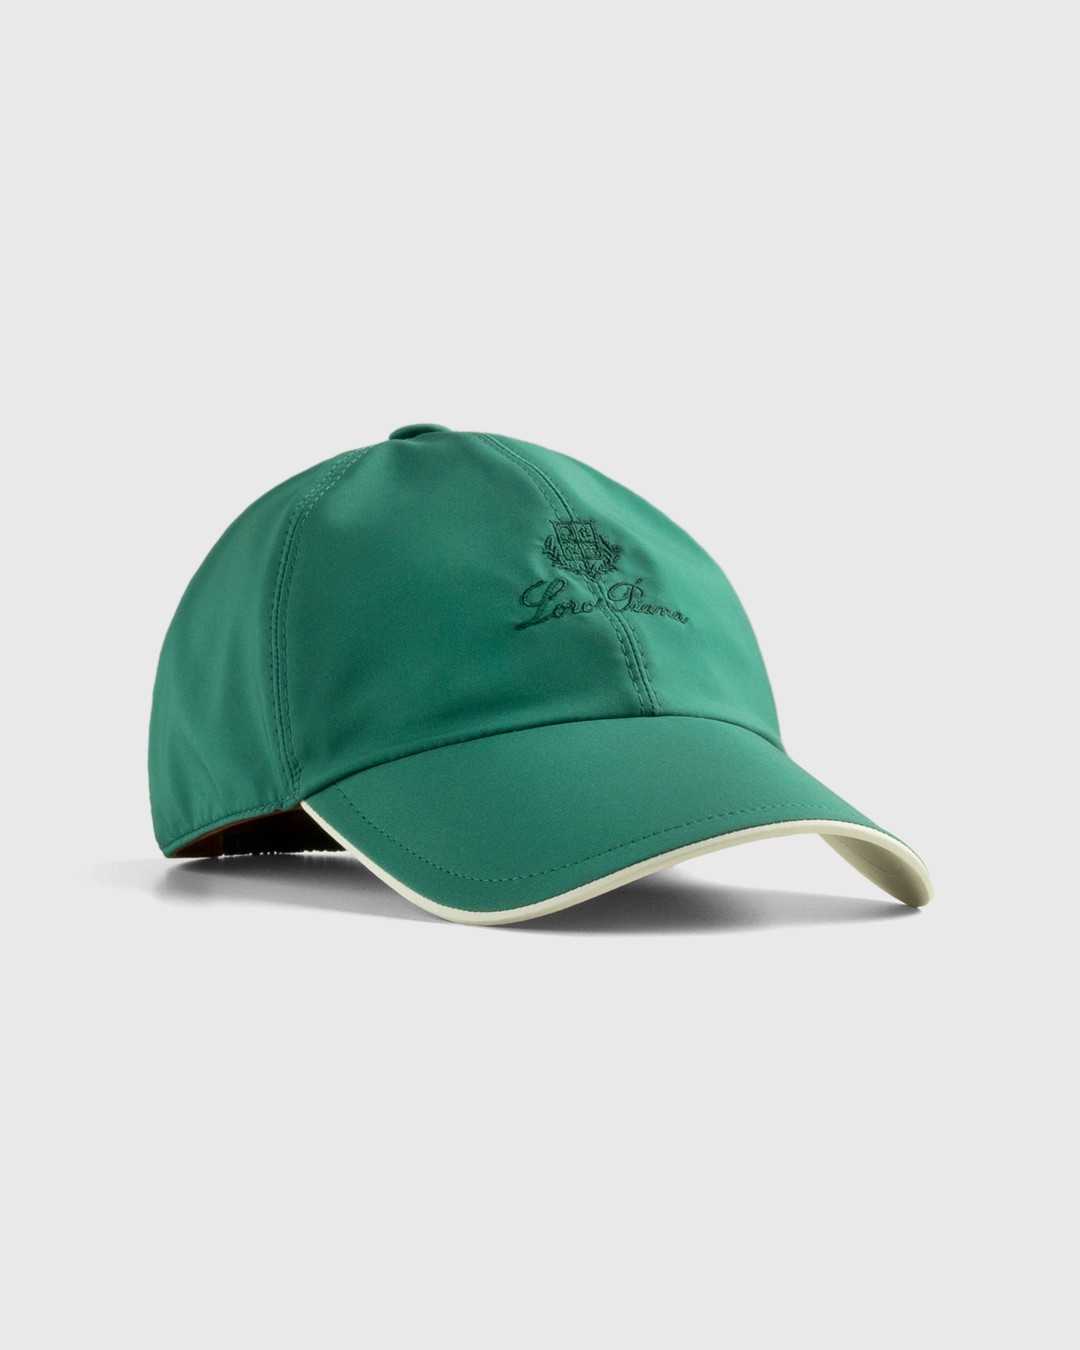 Loro Piana – Bicolor Baseball Cap Green Mint / Ivory - Hats - Green - Image 1